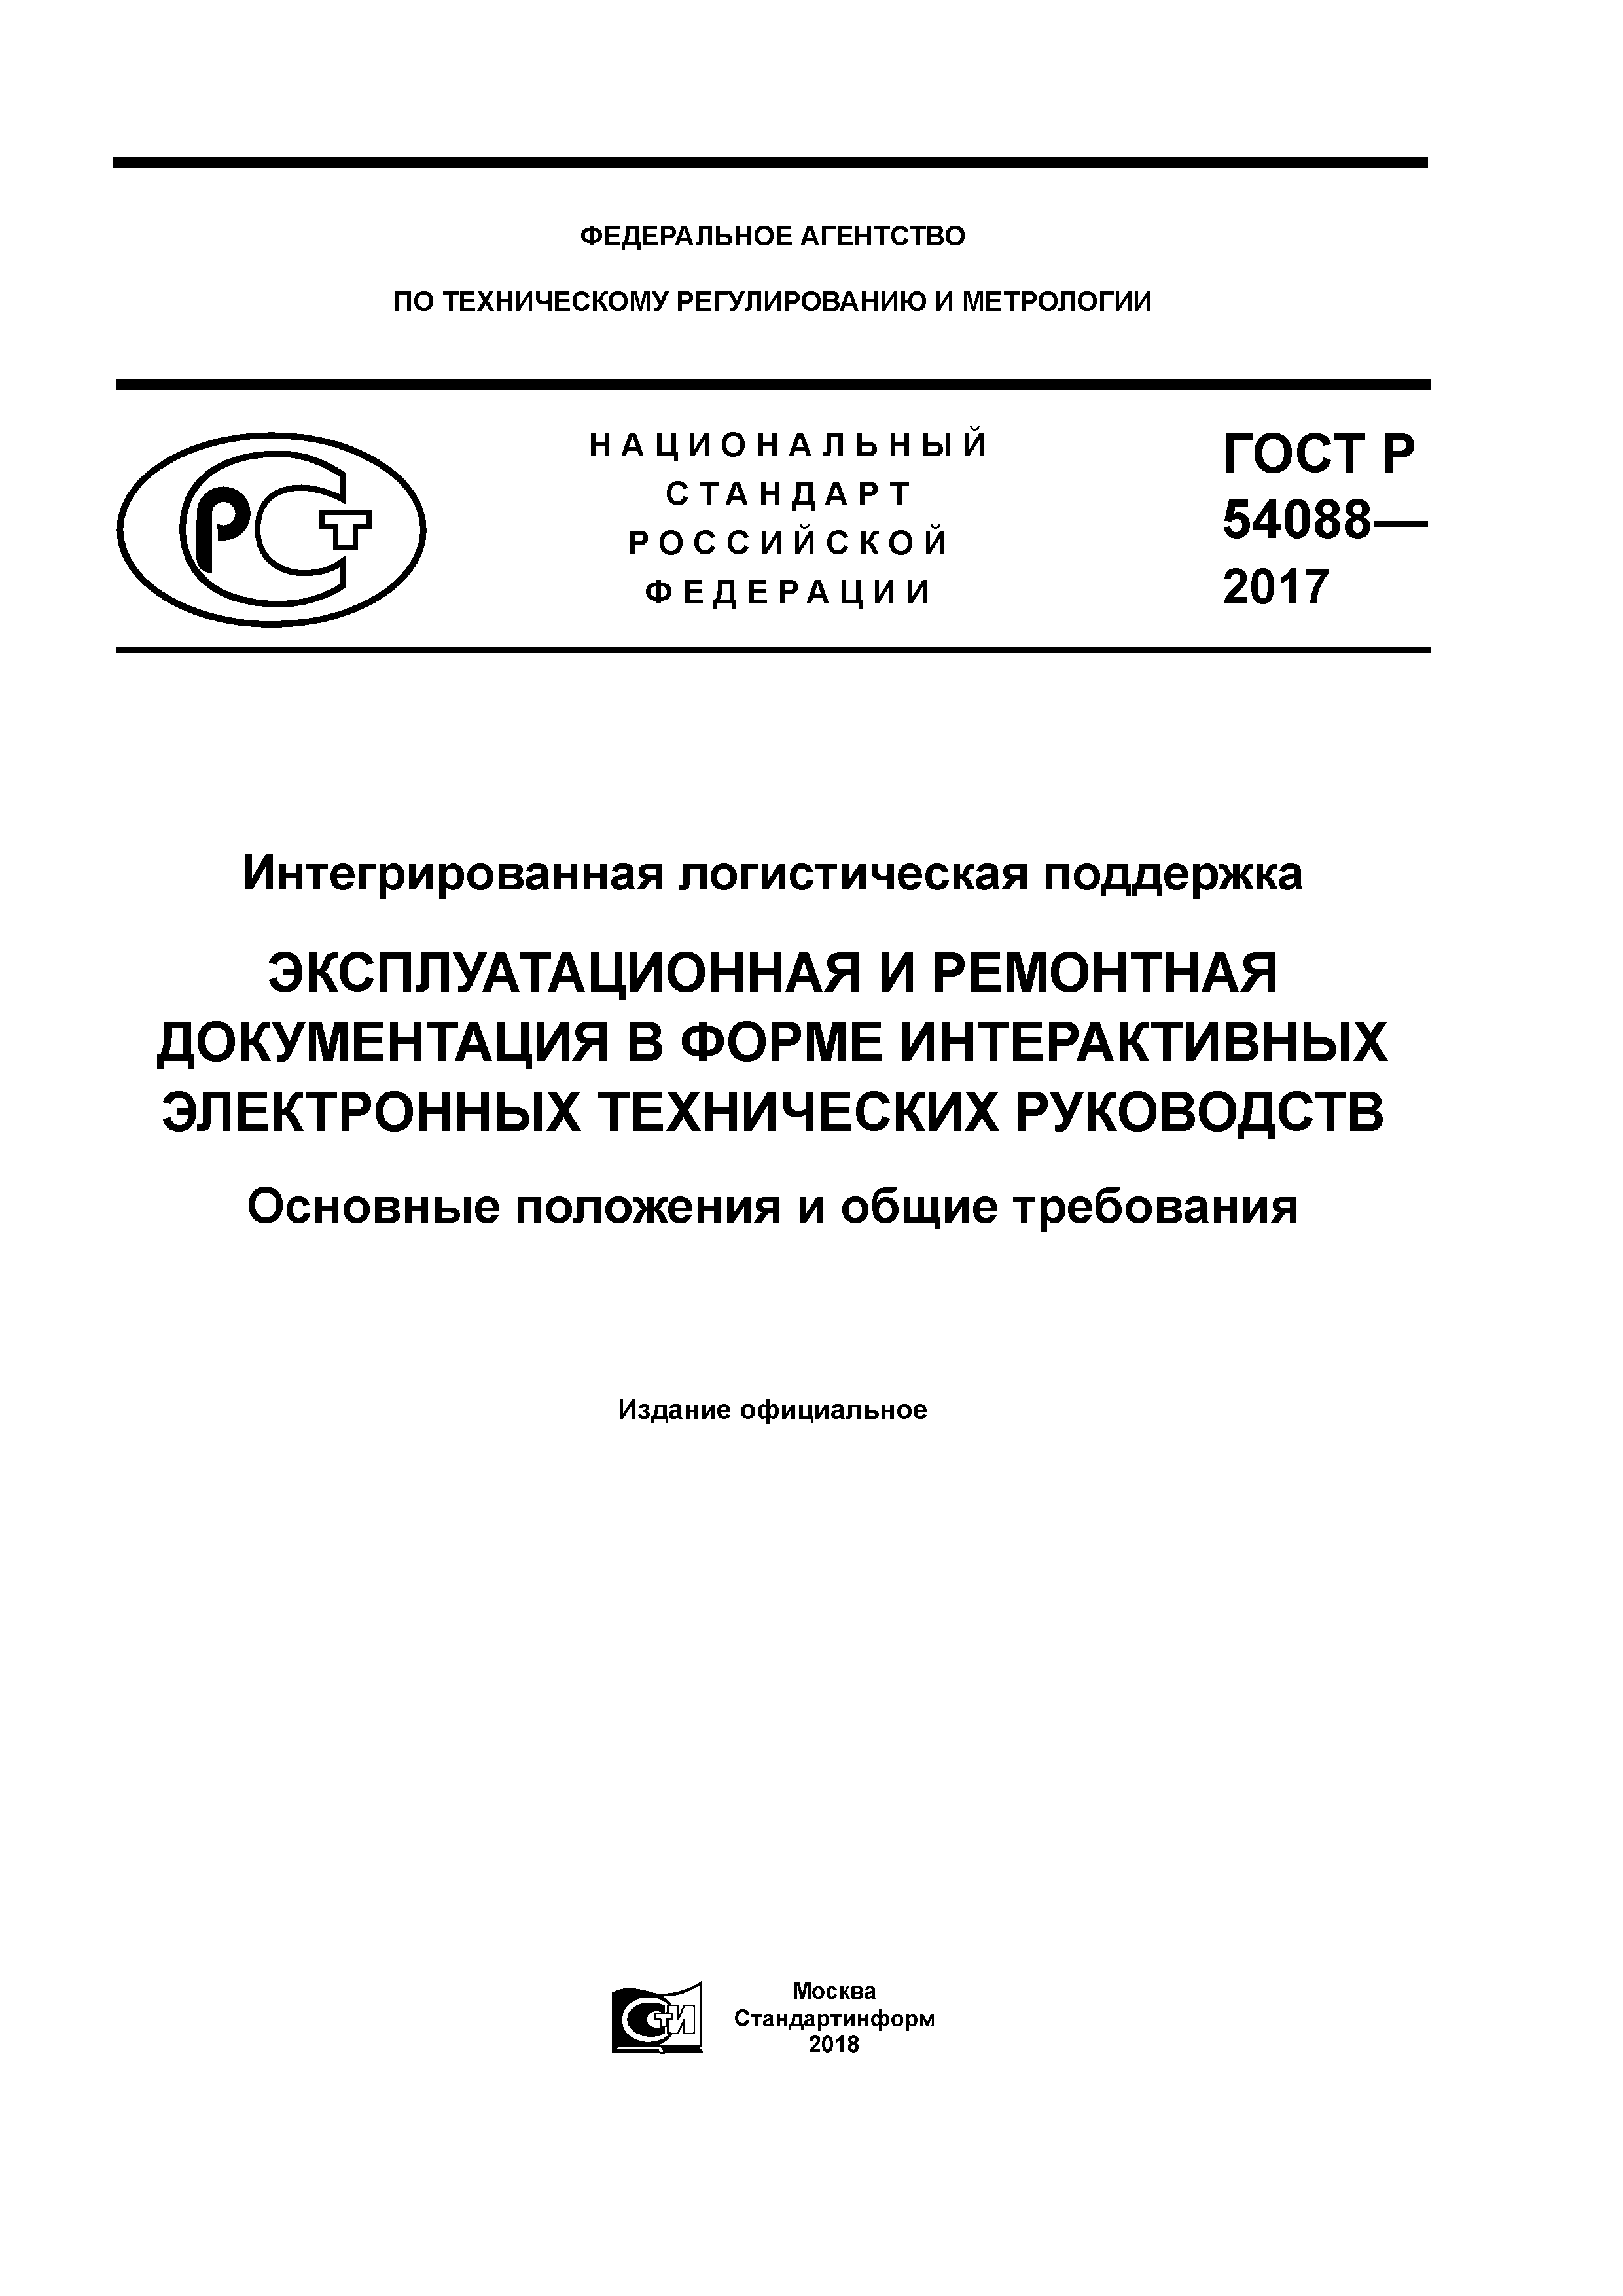 ГОСТ Р 54088-2017